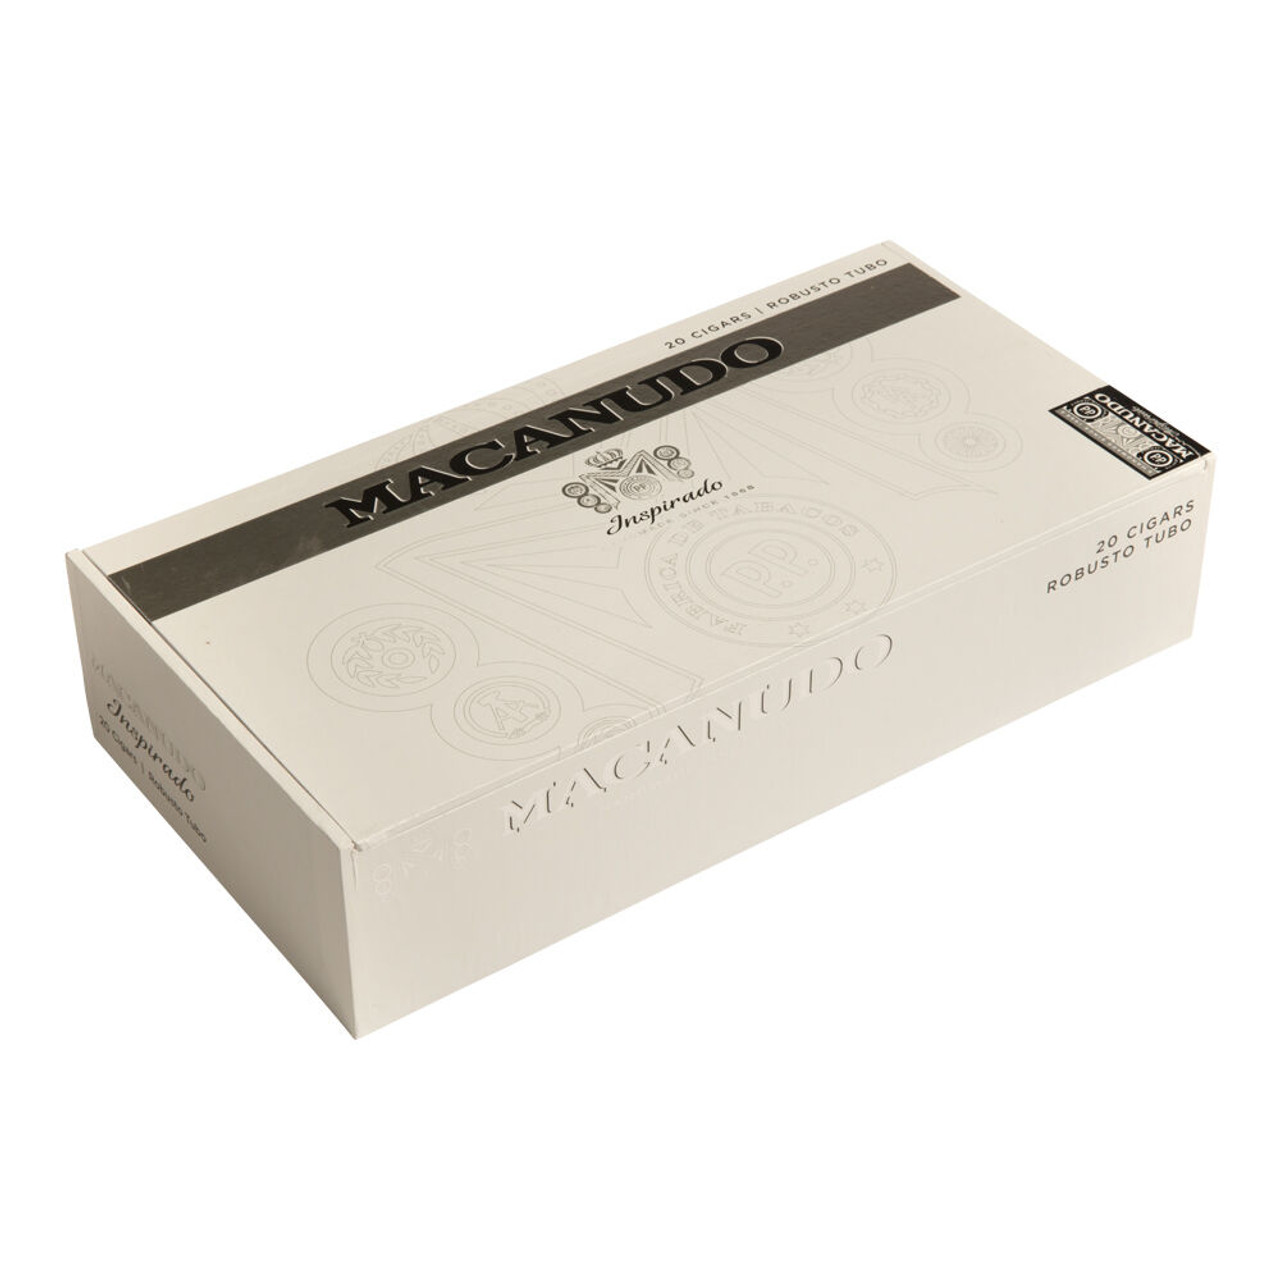 Macanudo Inspirado White Robusto Tubo Cigars - 5 x 50 (Box of 20) *Box